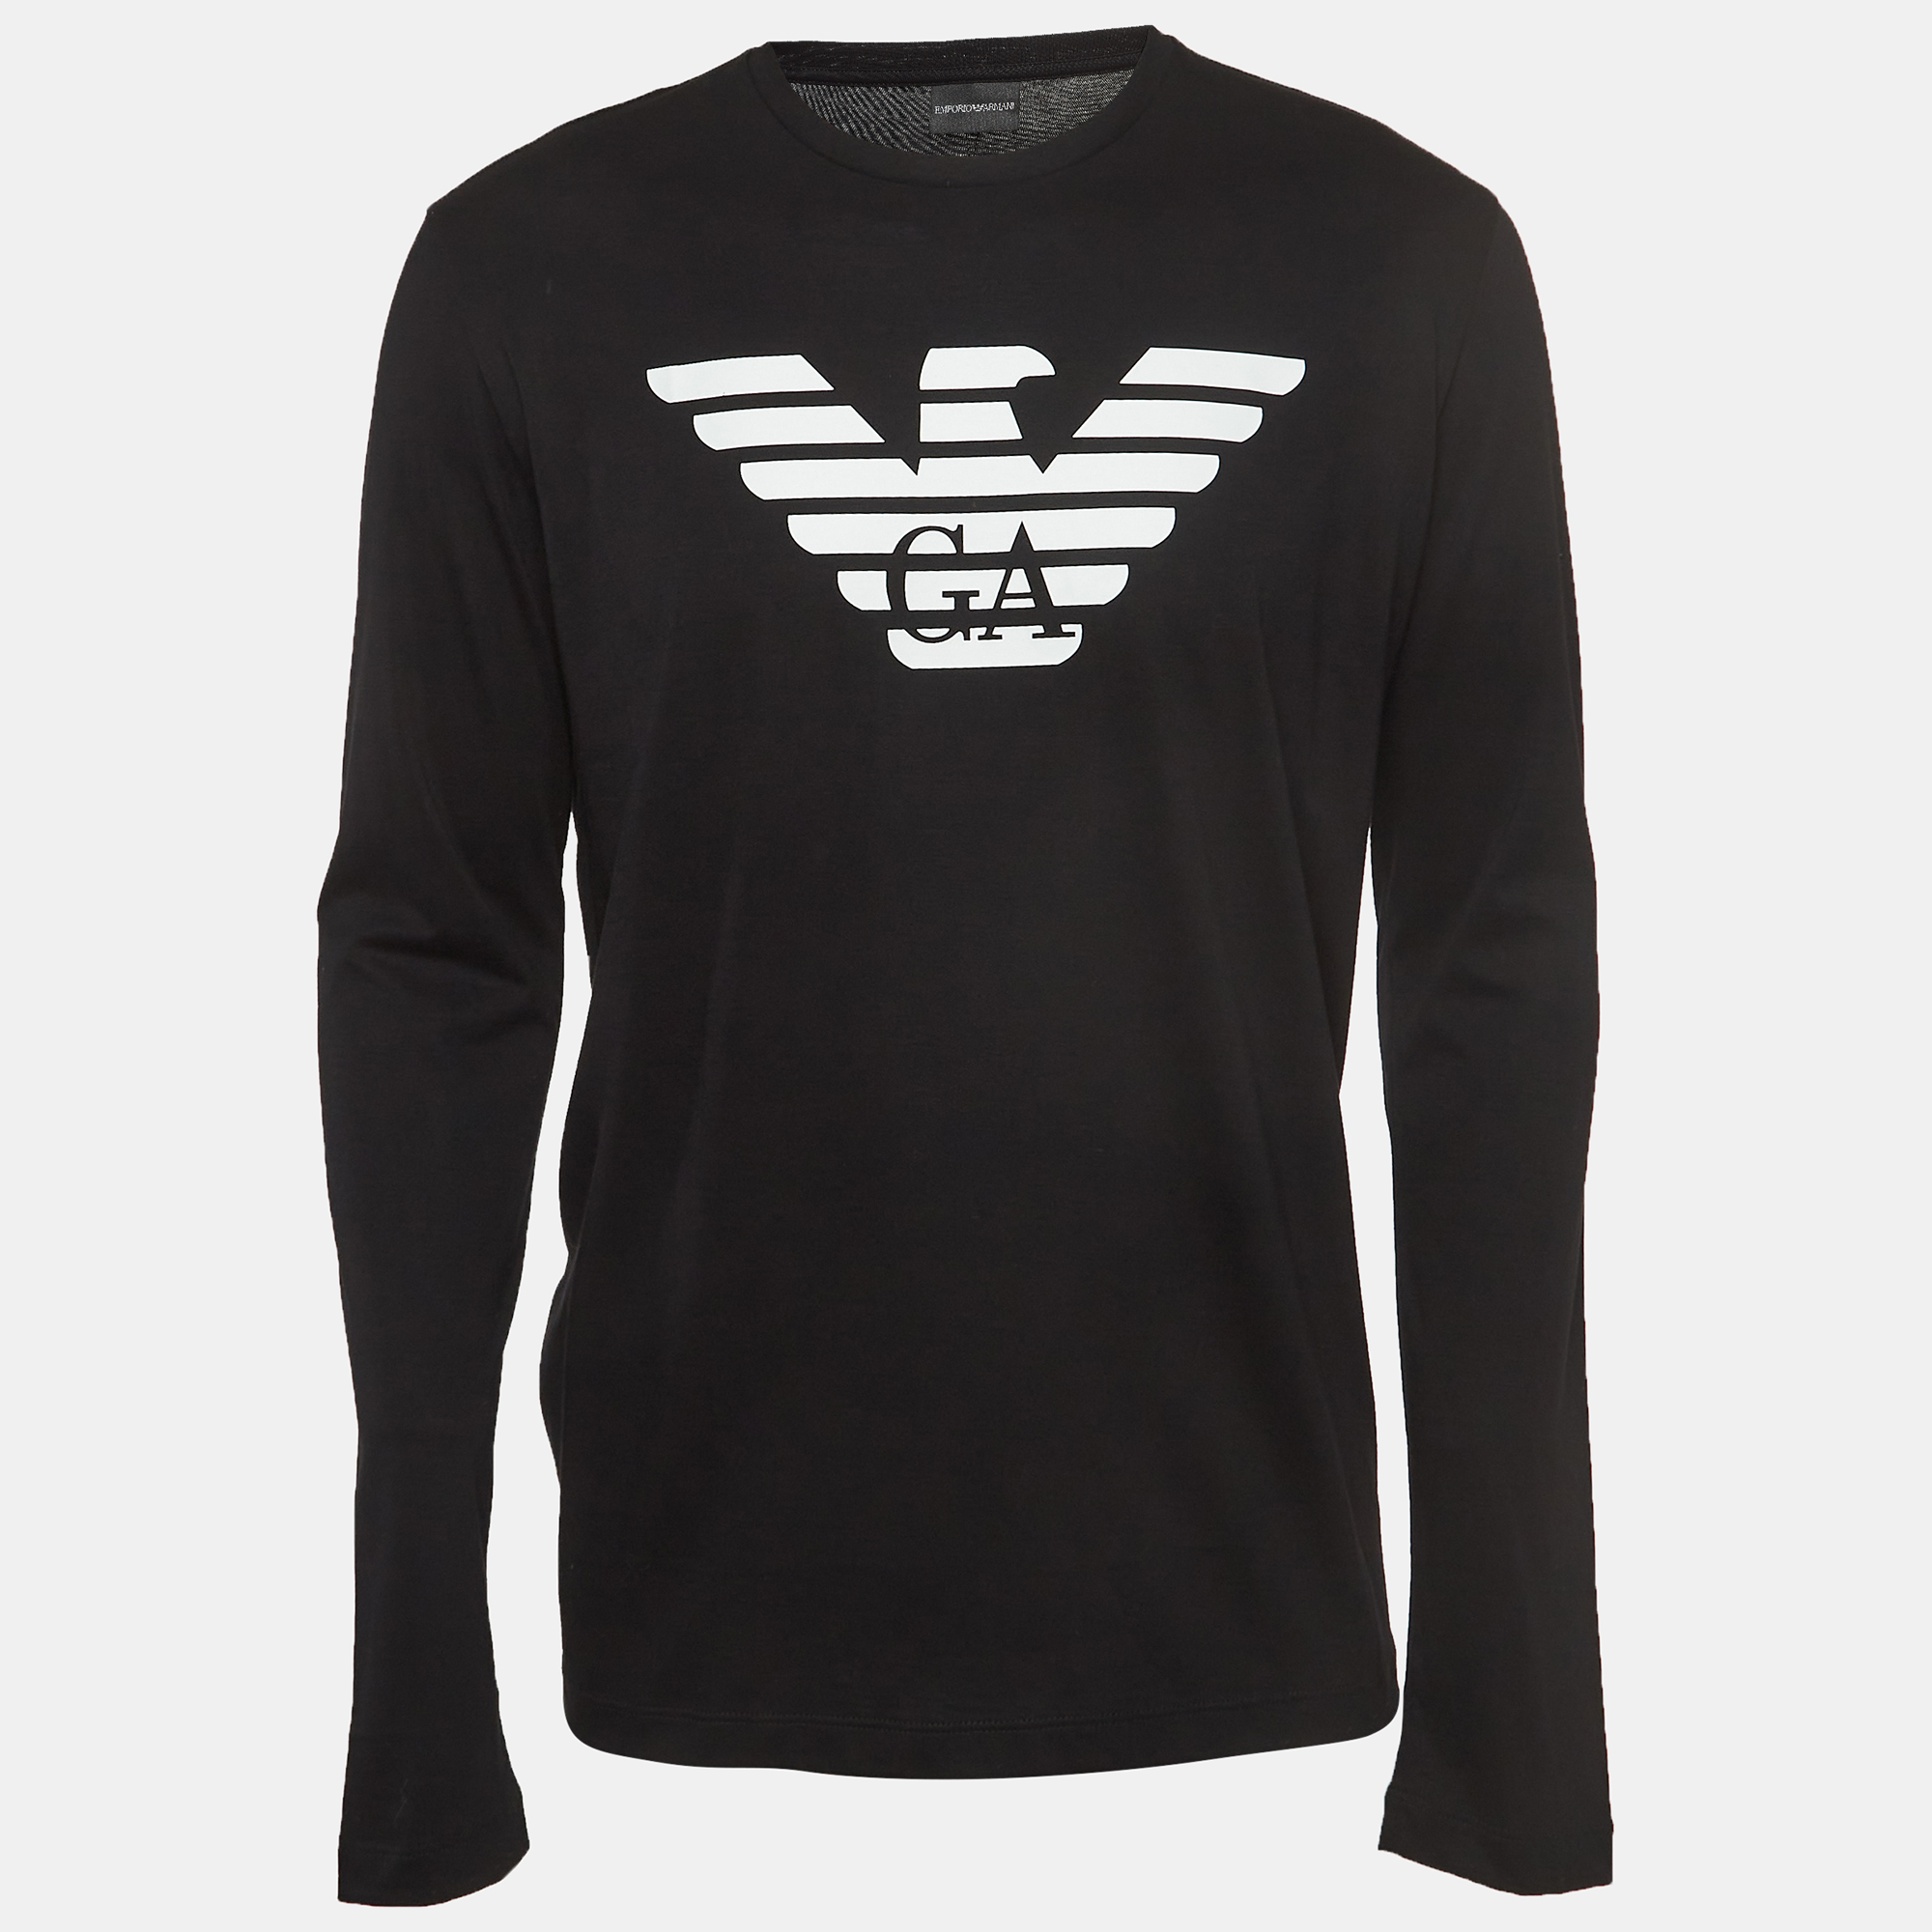 Emporio armani black logo print pima cotton long sleeve t-shirt xxxl